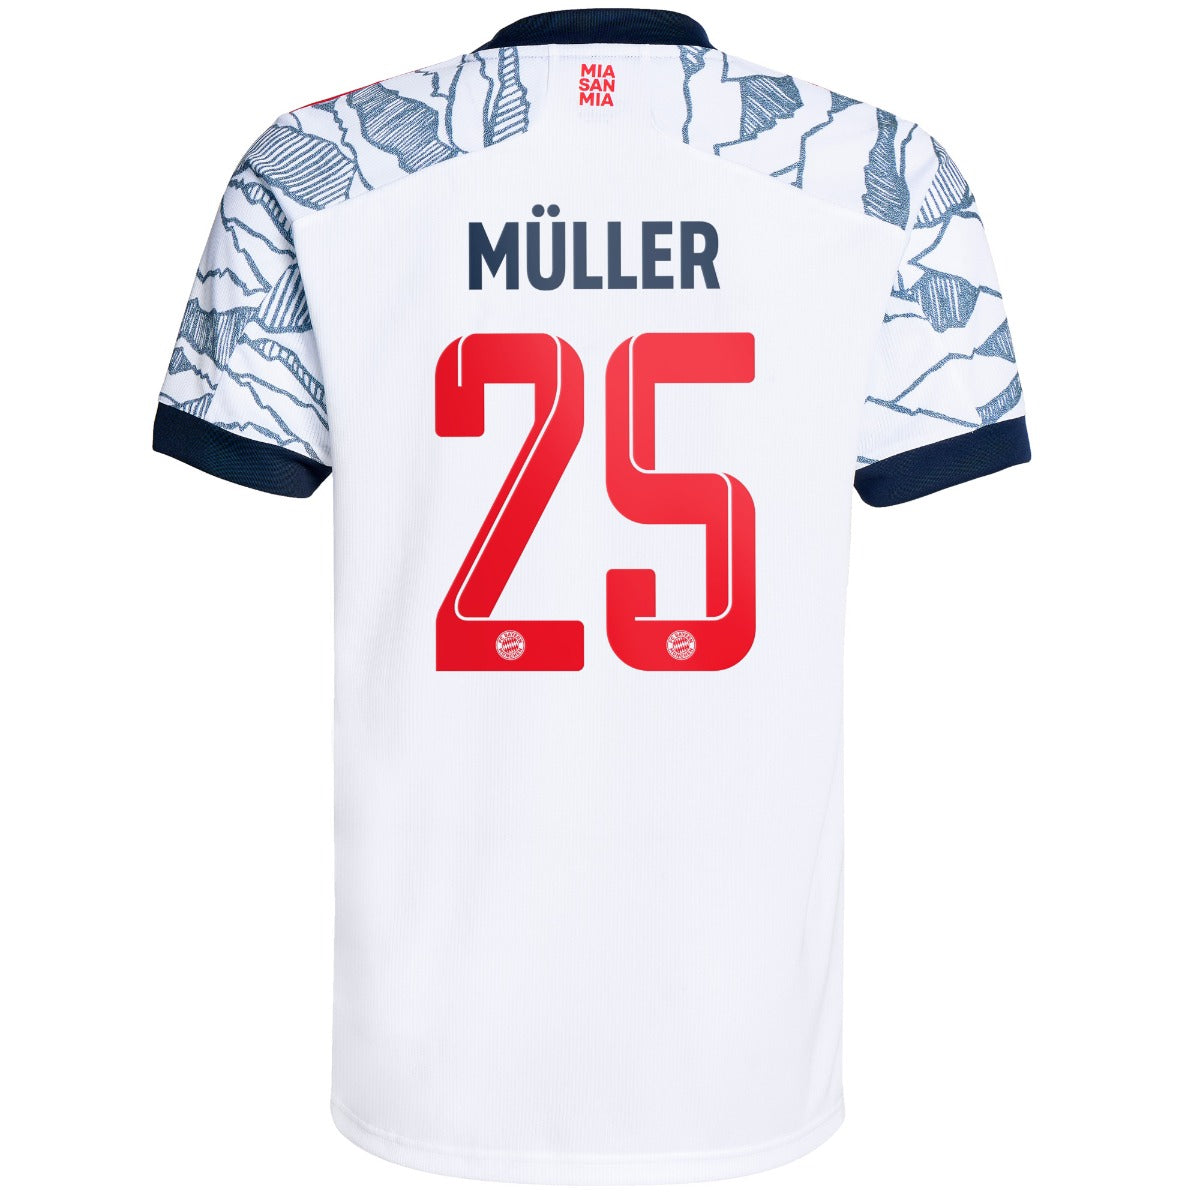 Adidas, Terza maglia del Bayern Monaco Adidas 2021-22 - Bianco